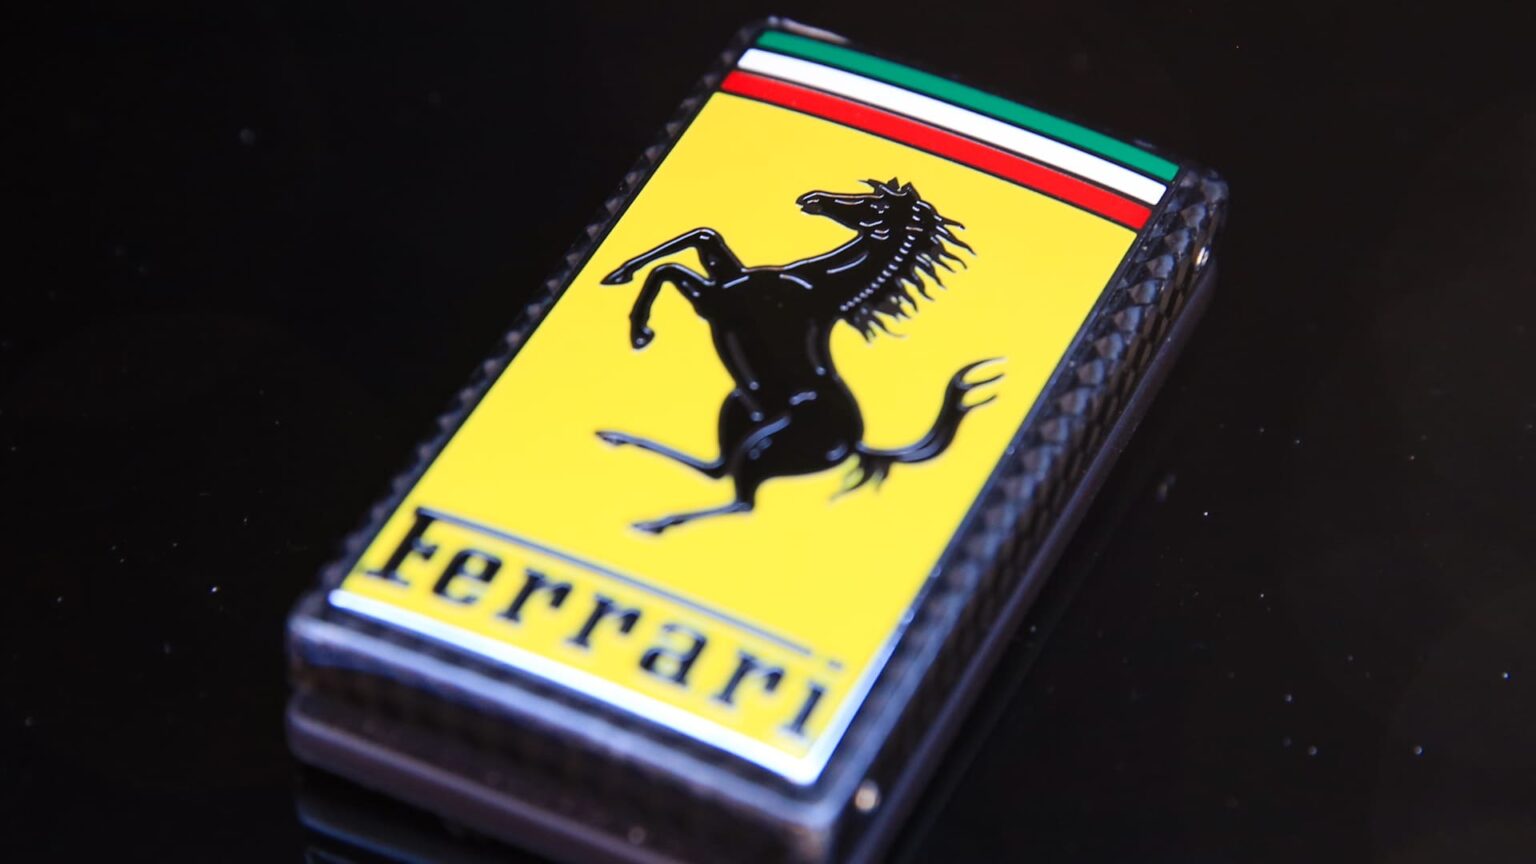 Ferrari (RACE) Q4 2023 earnings